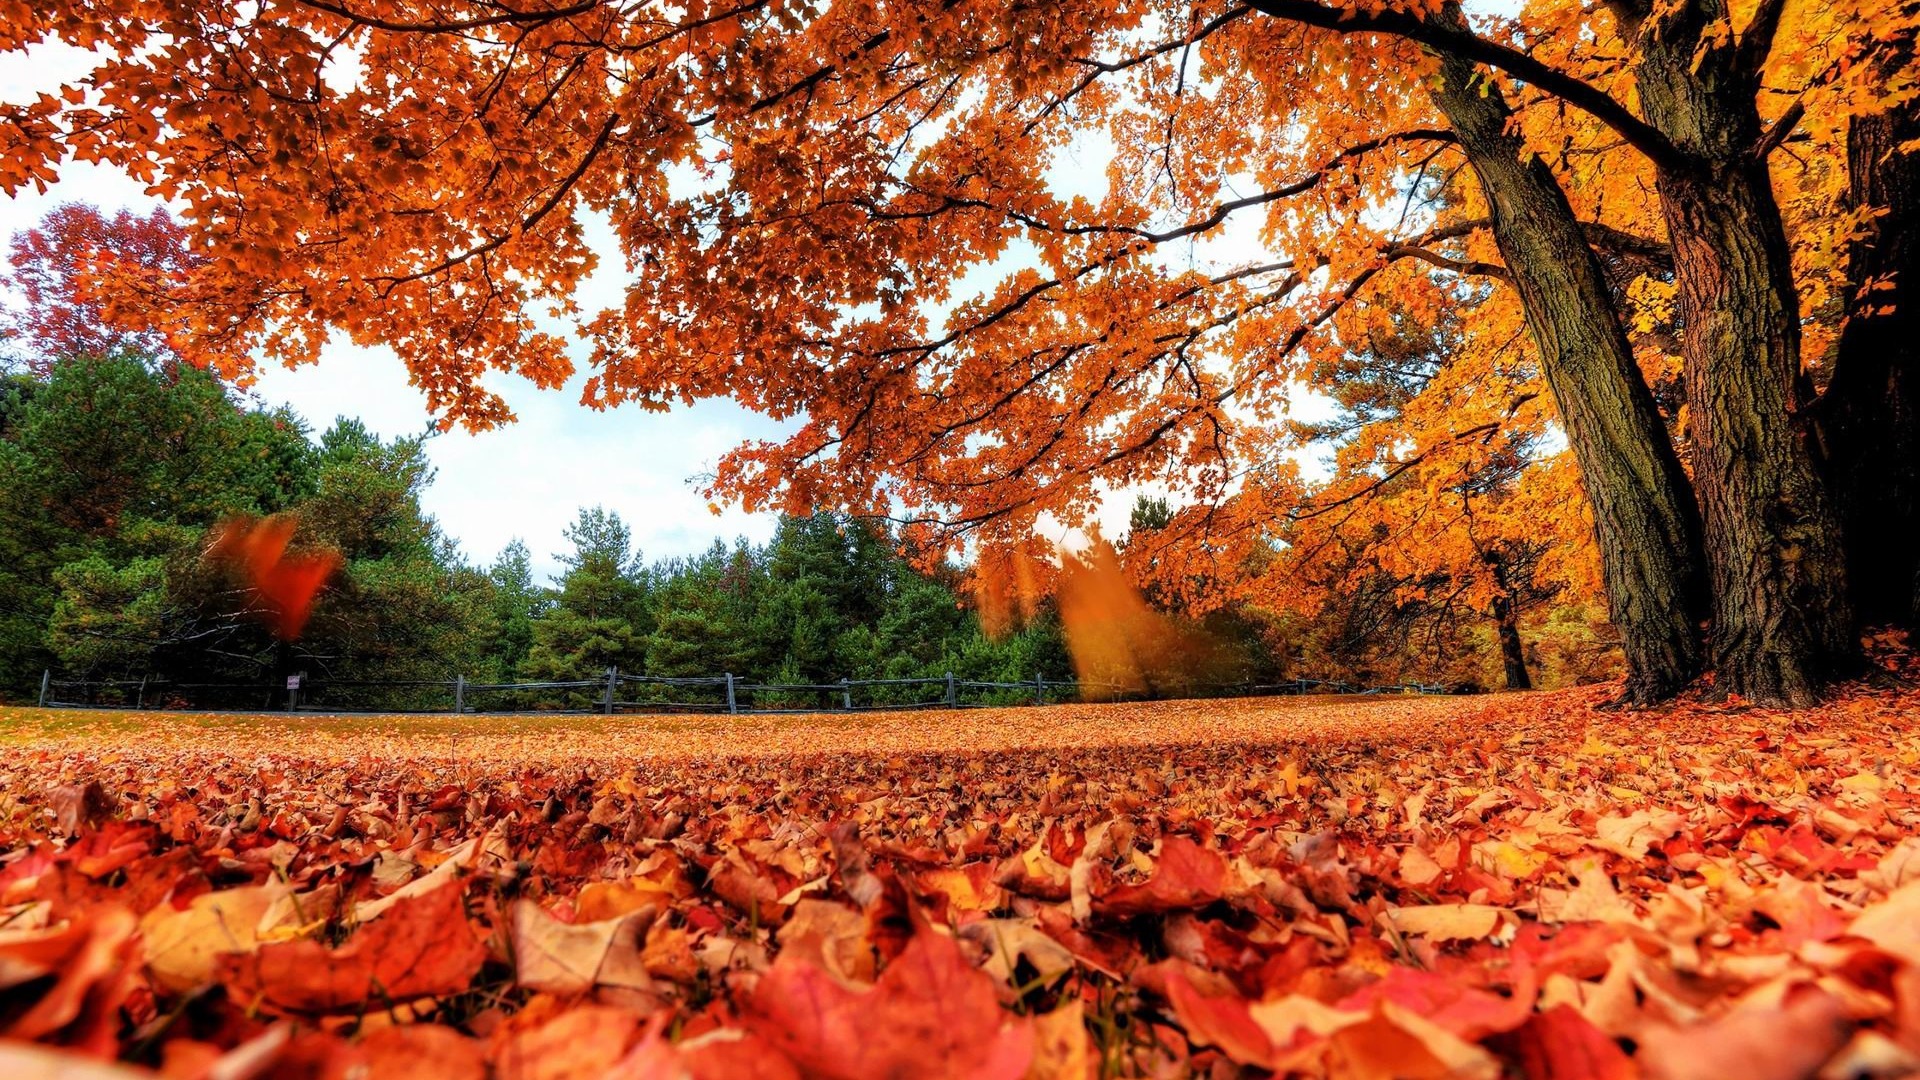 Windows 8.1 Theme HD wallpapers: beautiful autumn leaves #1 - 1920x1080